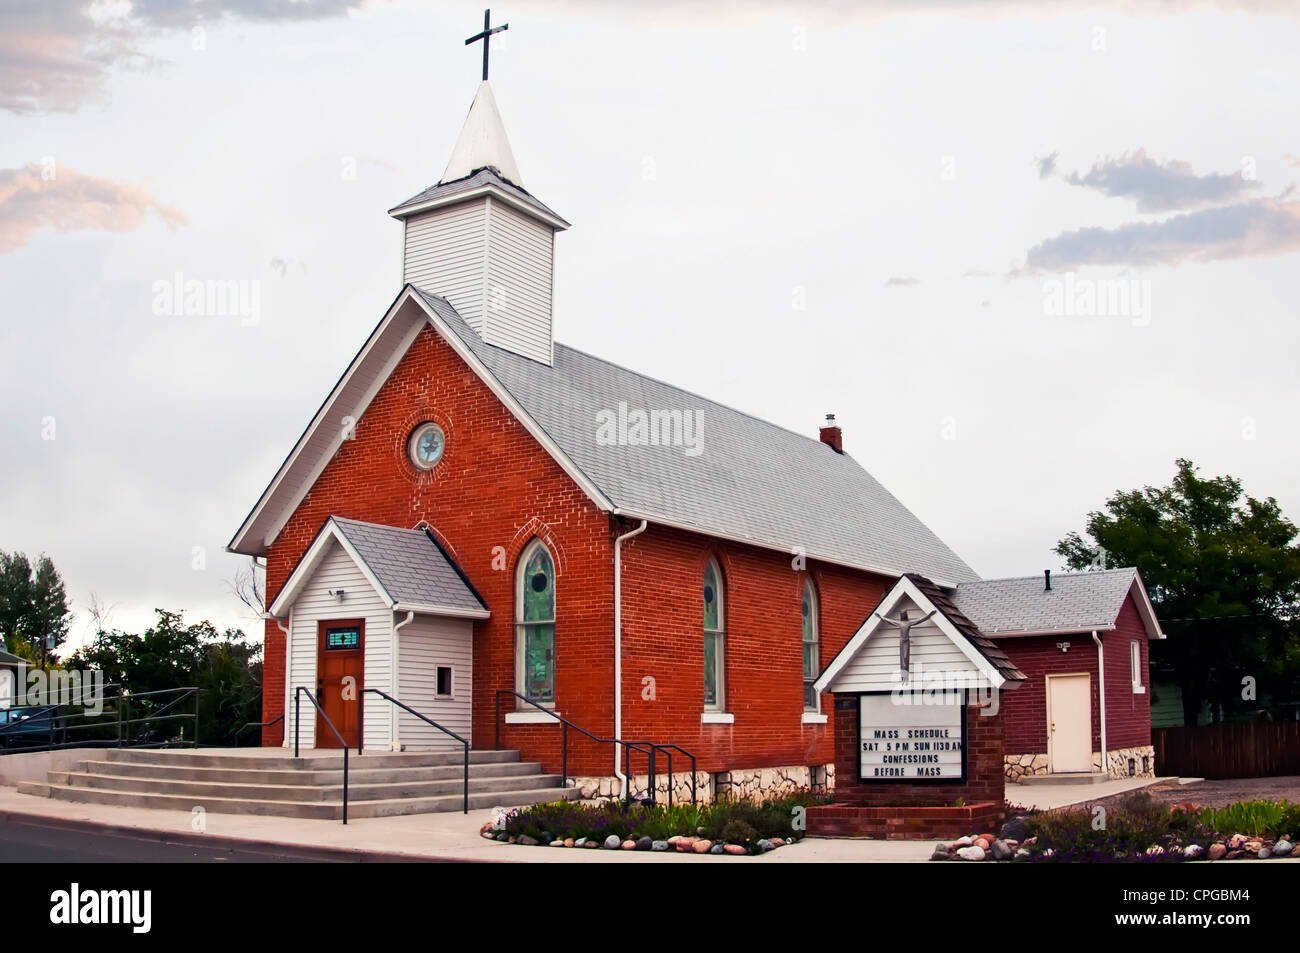 Pequeña iglesia cristiana en un centro comunitario de Colorado, EE.UU. Foto de stock